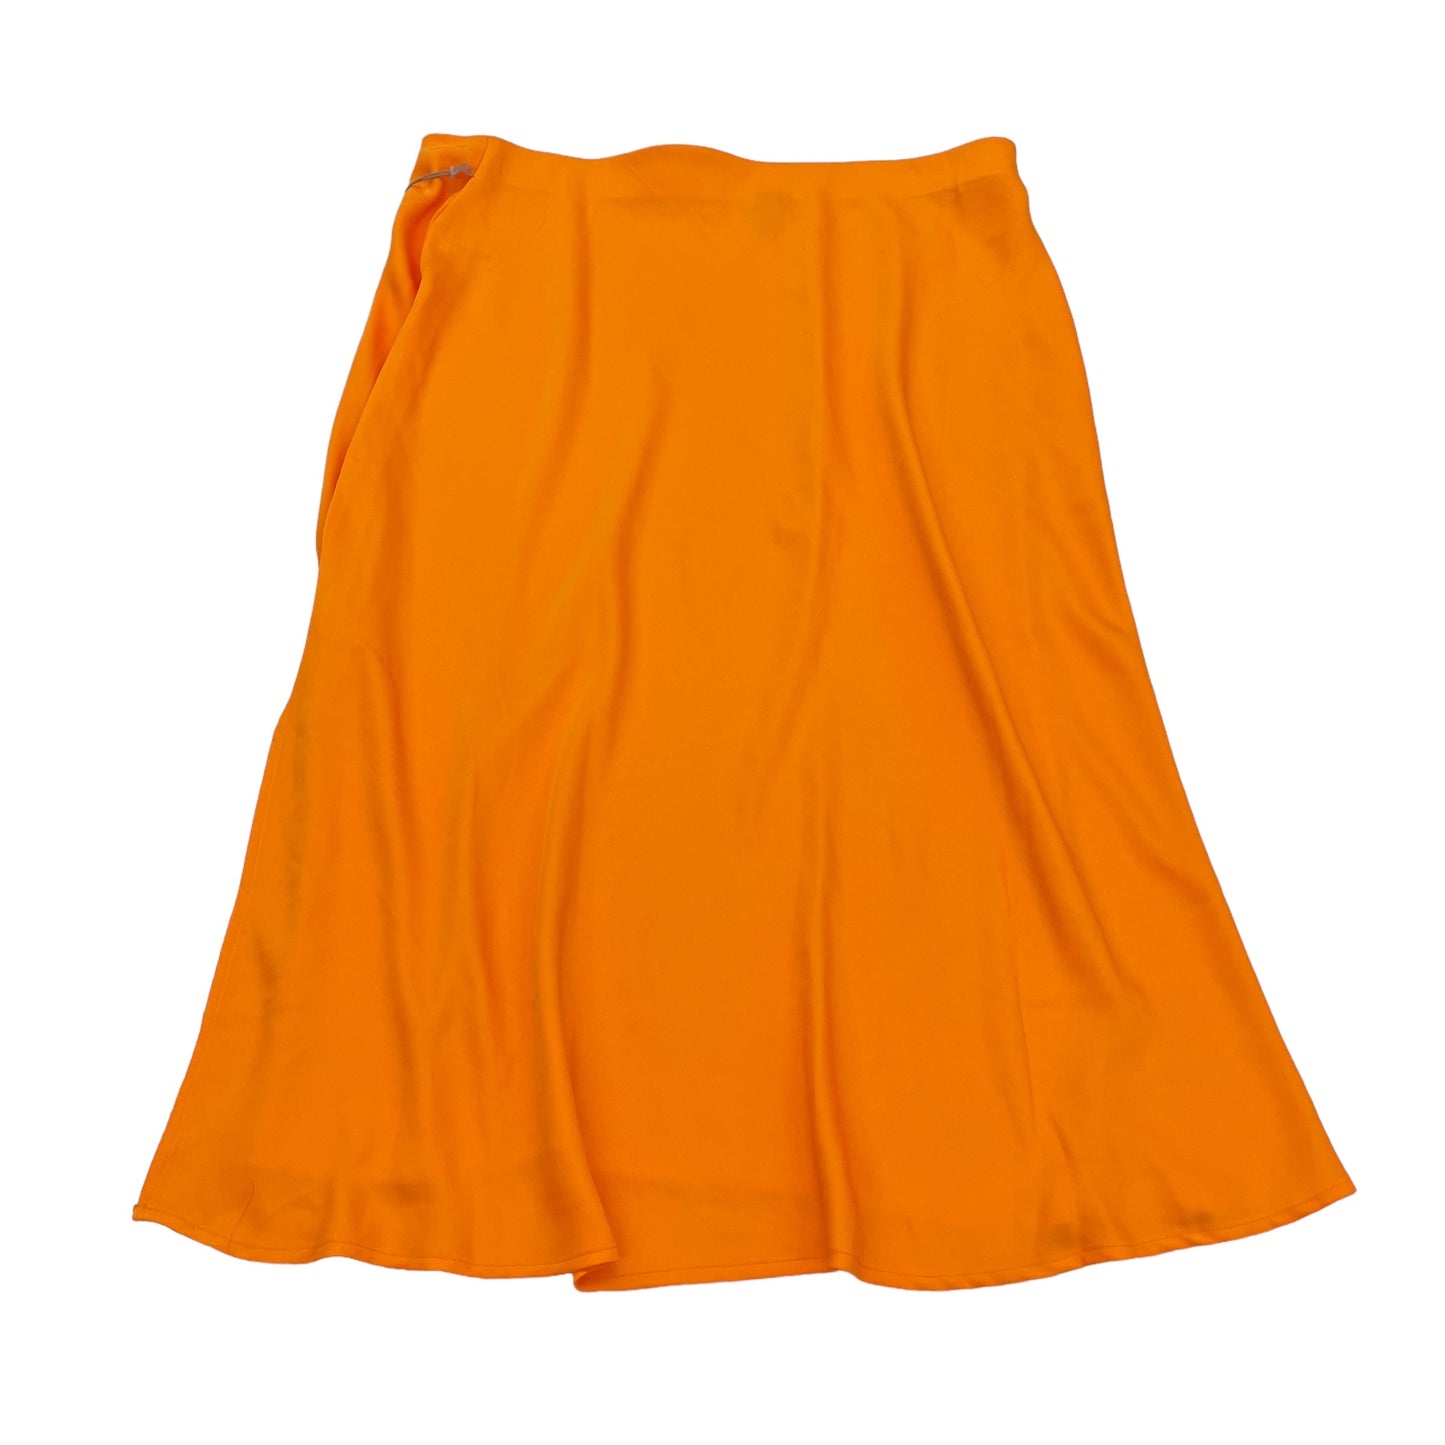 Skirt Midi By A New Day  Size: Xxl